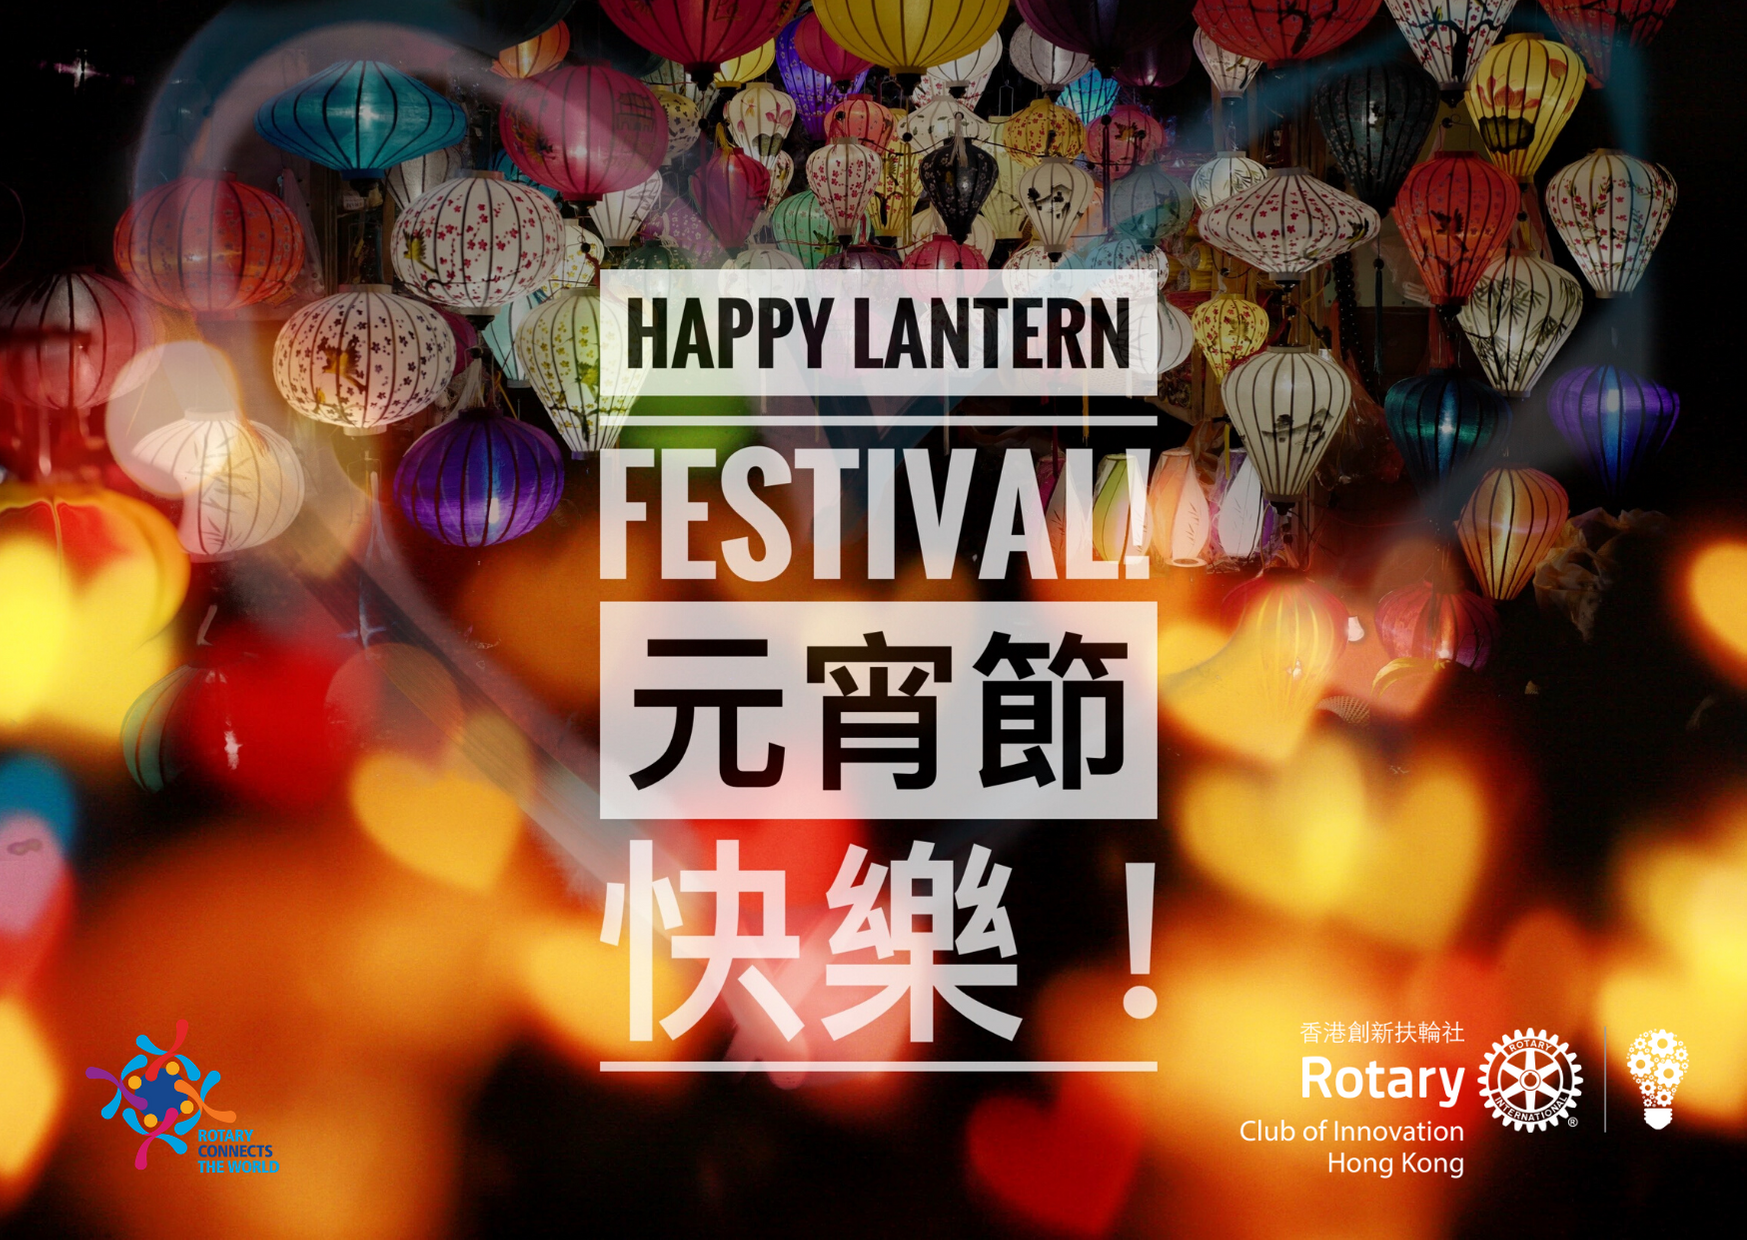 Happy Lantern Festival 2020!